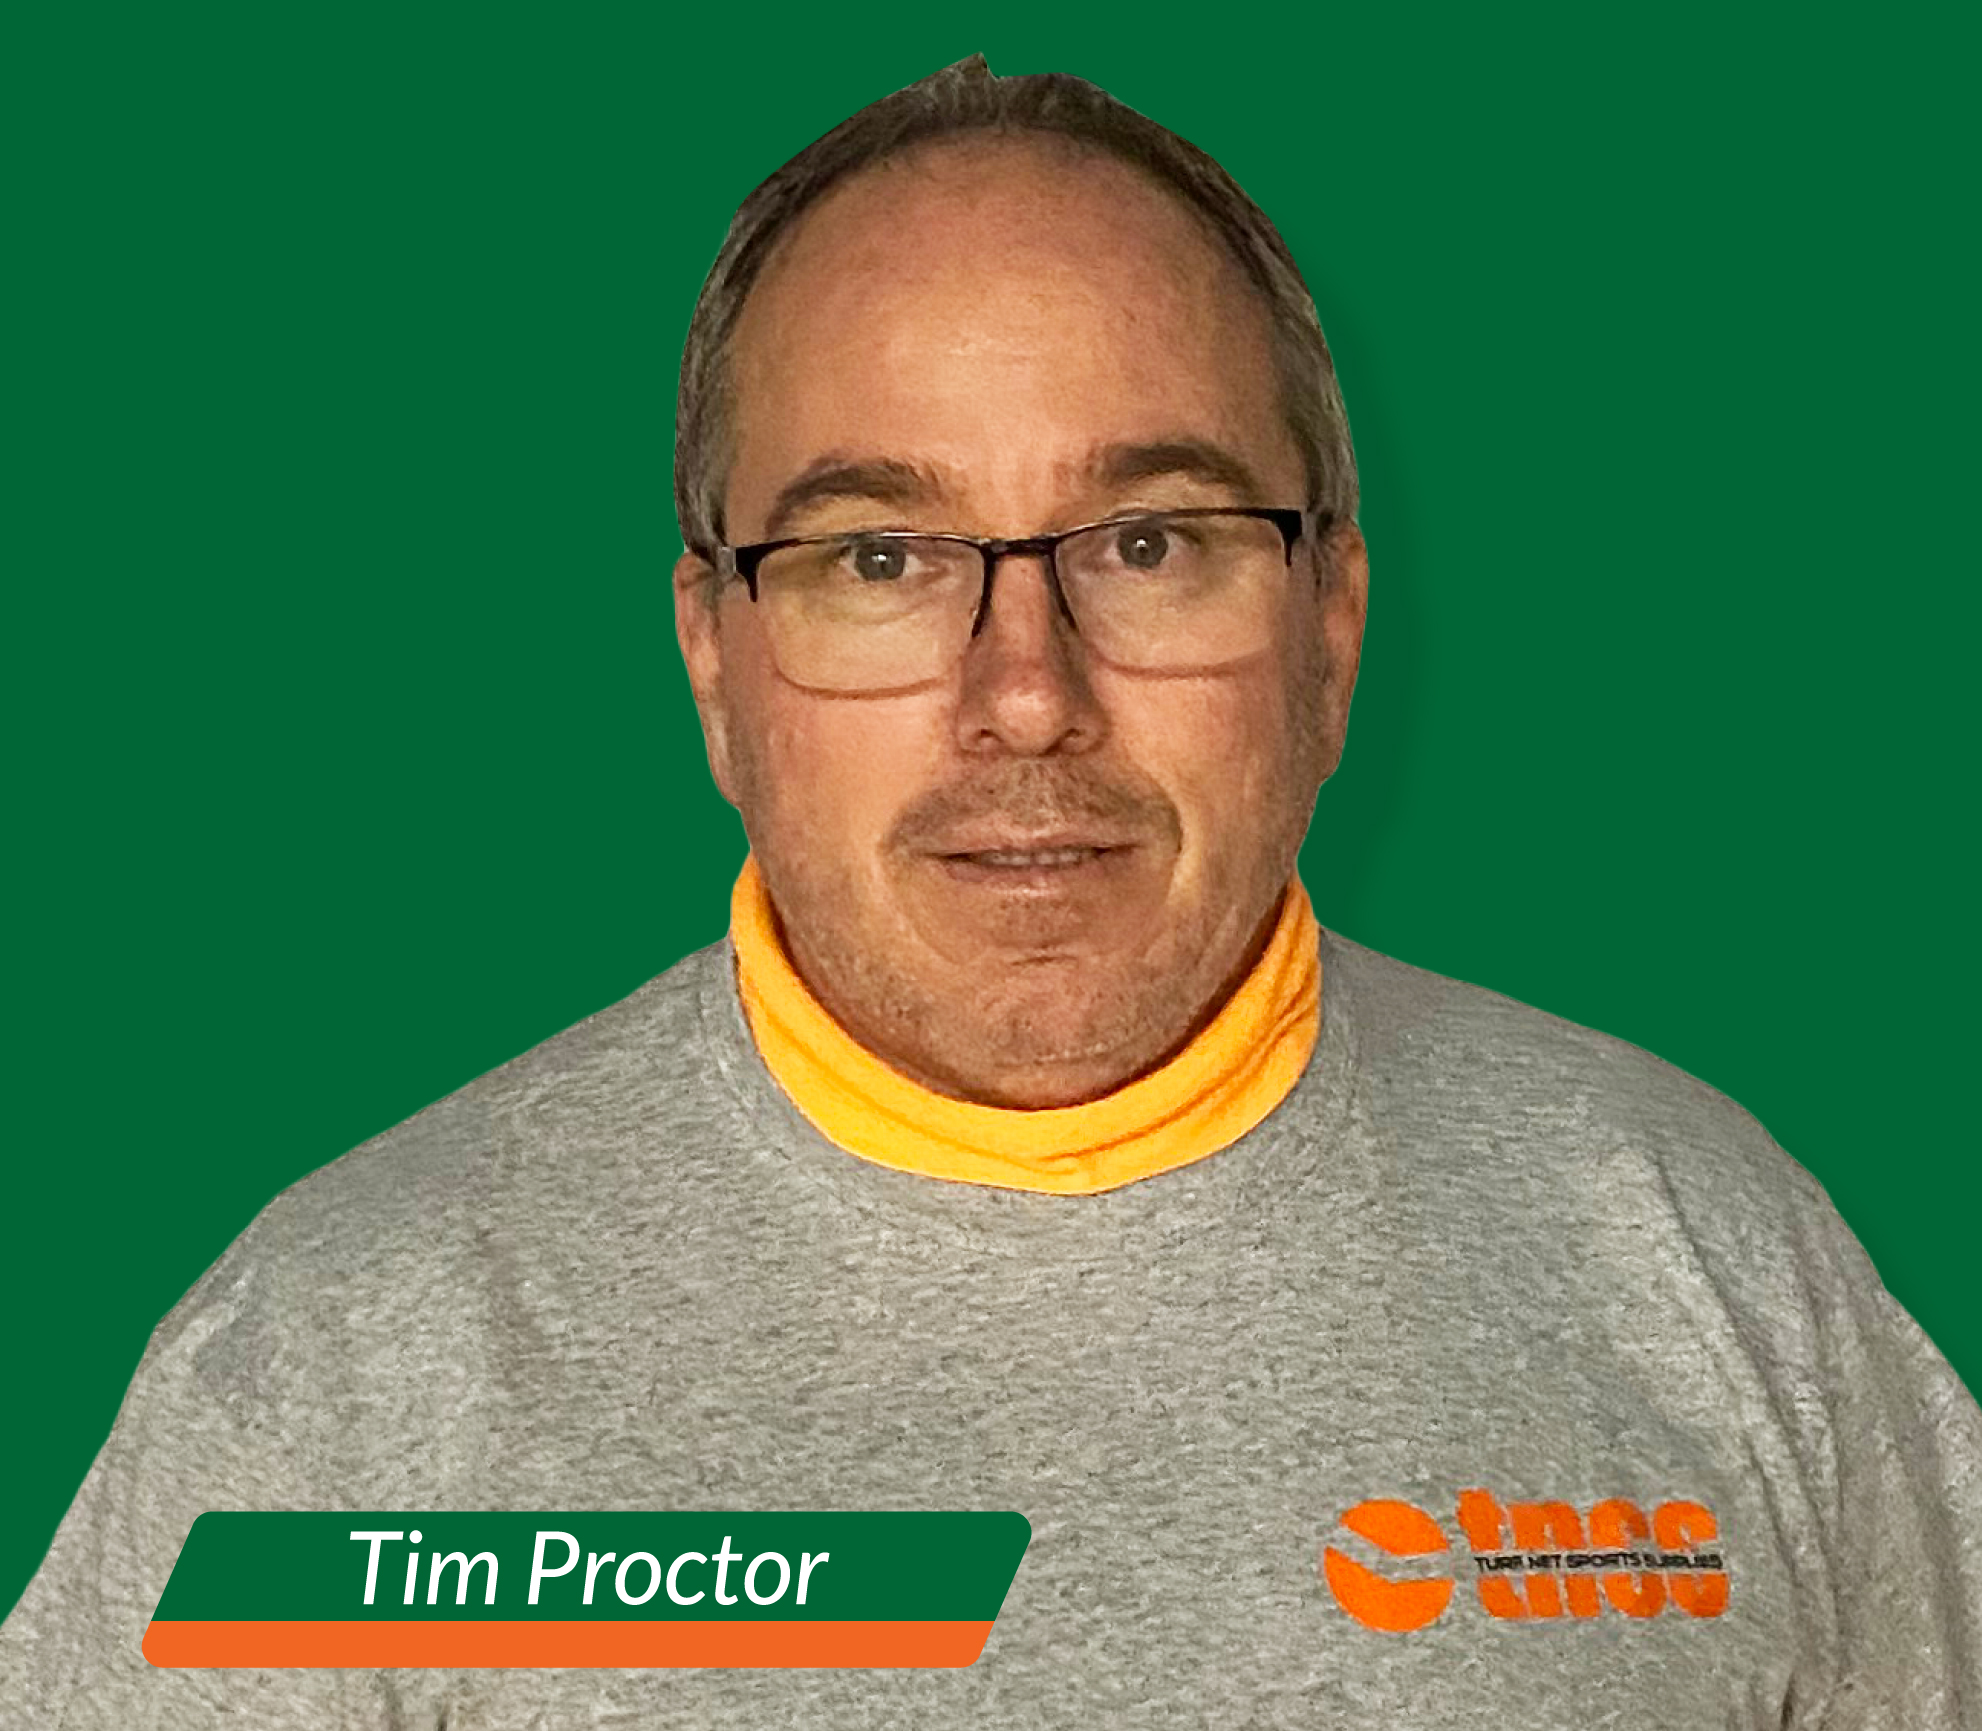 Tim Proctor, President Turf Net Sports Supplies